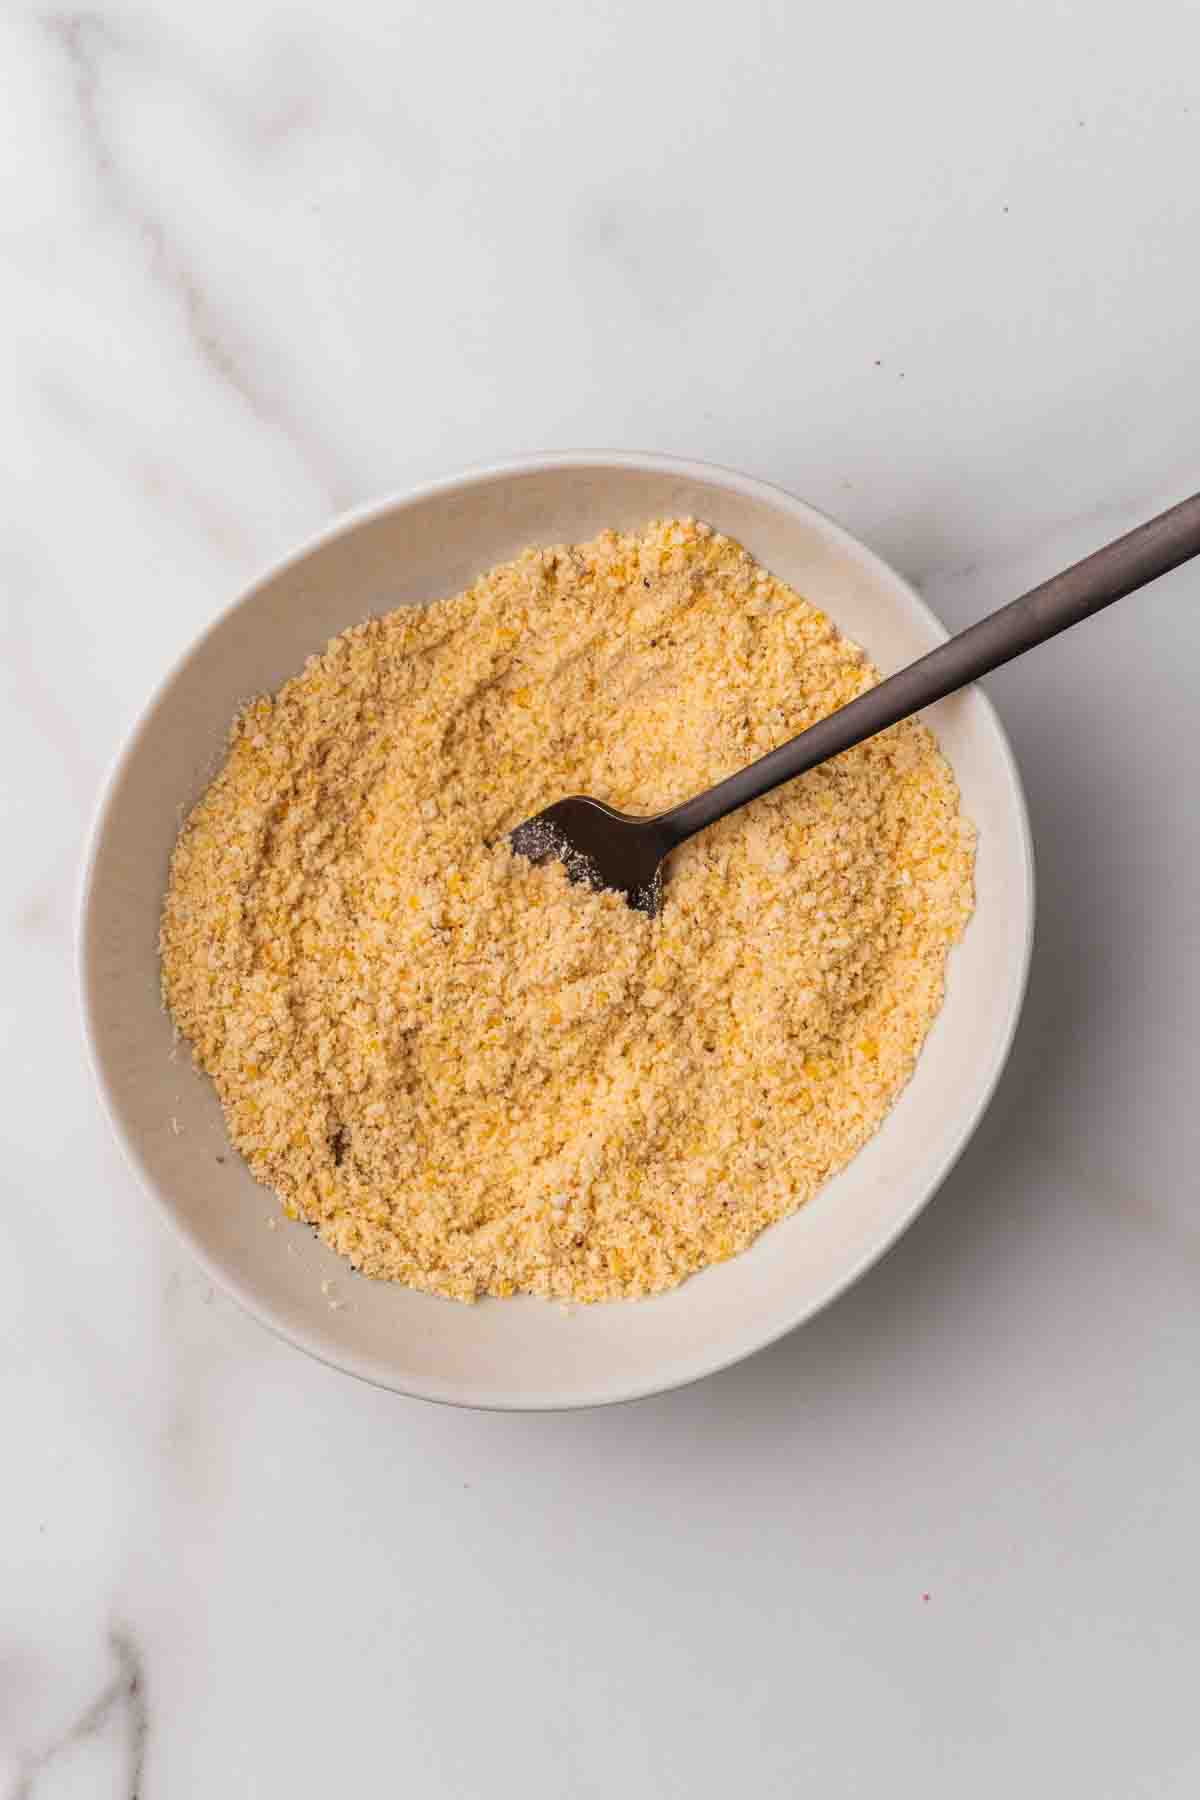 Cornmeal in a white bowl.